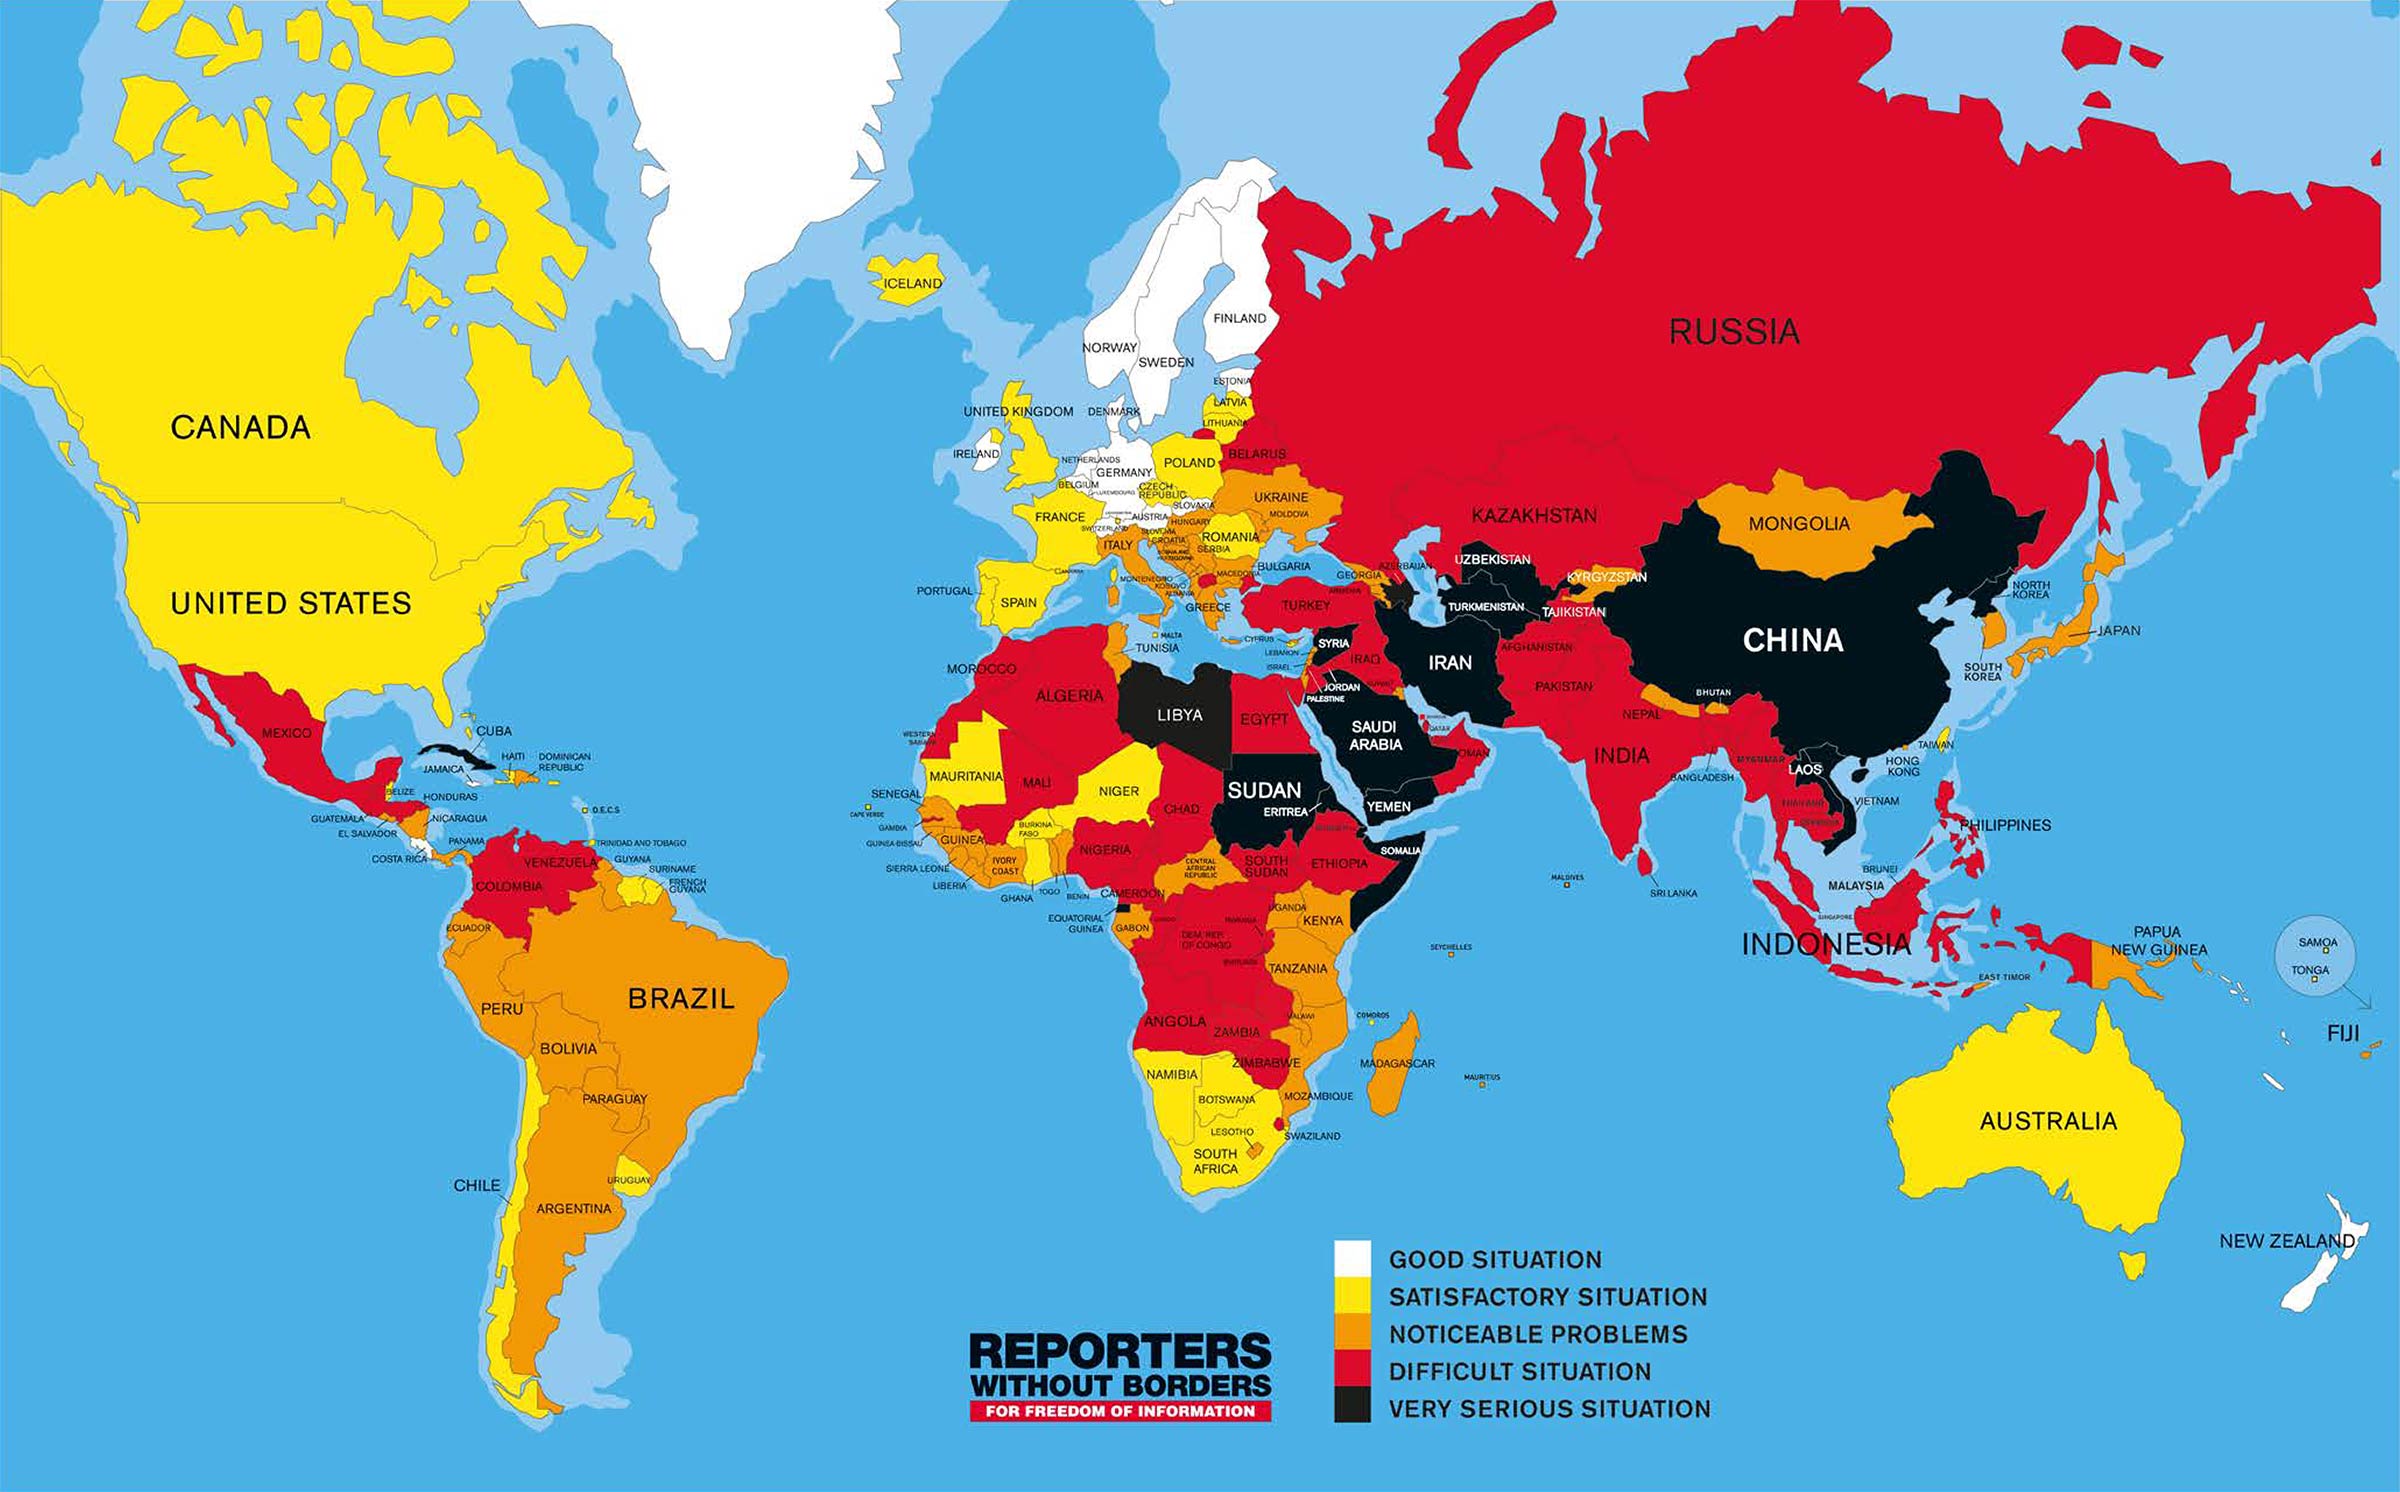 press-freedom-map-2016.jpg